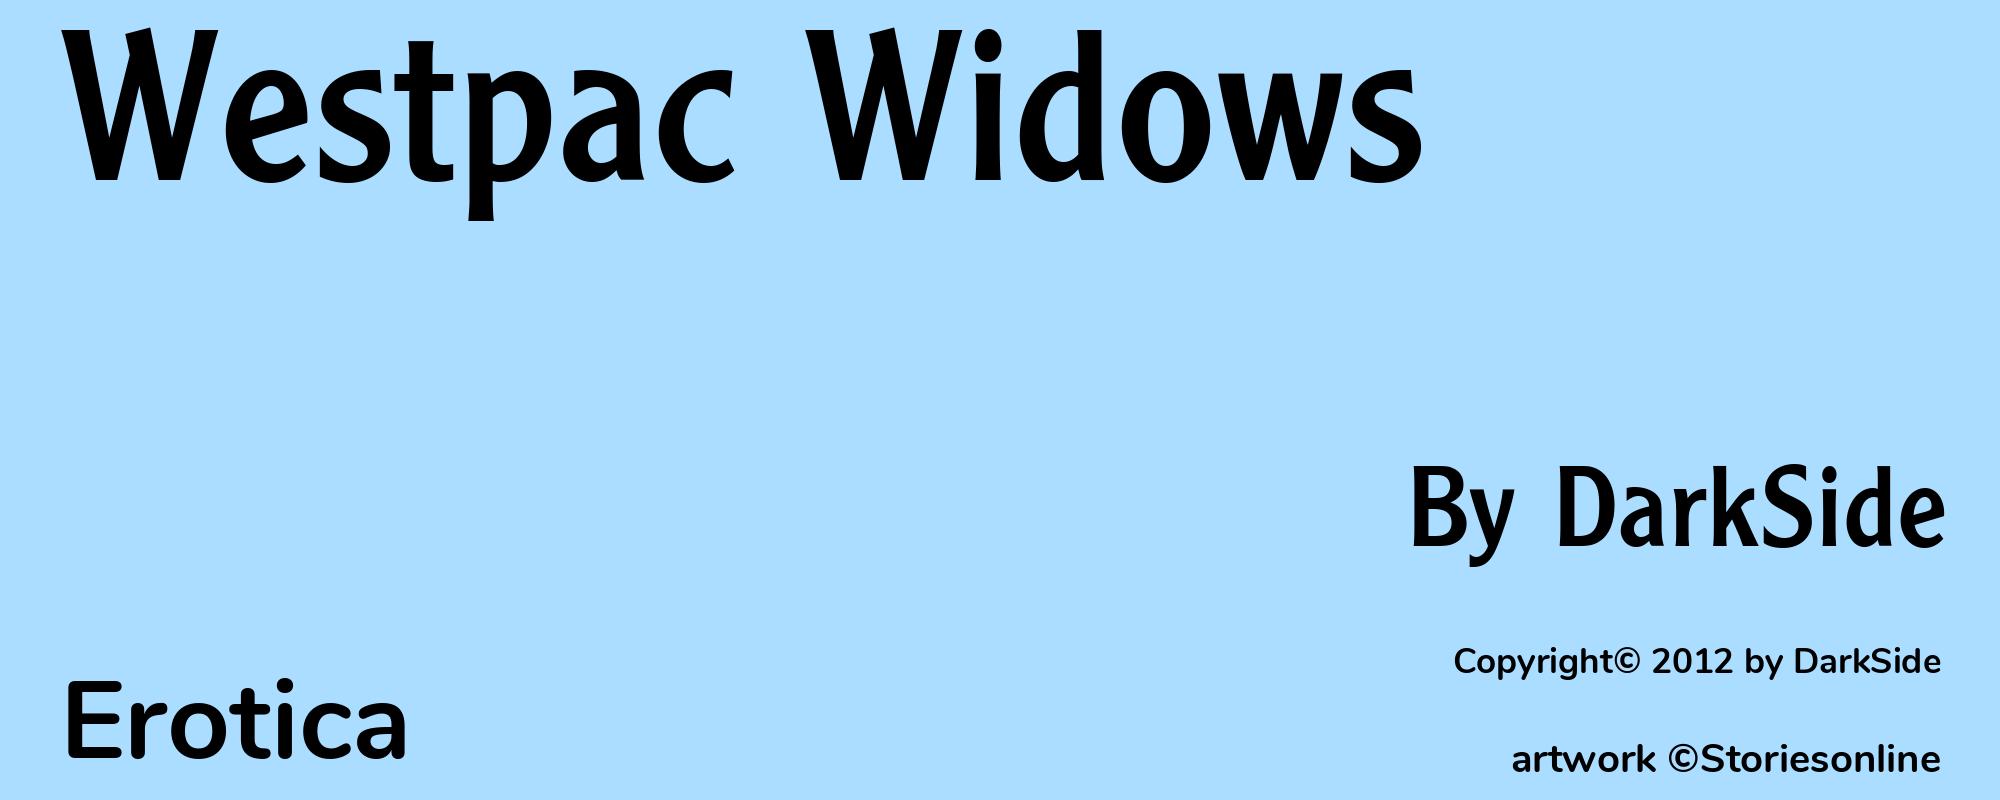 Westpac Widows - Cover